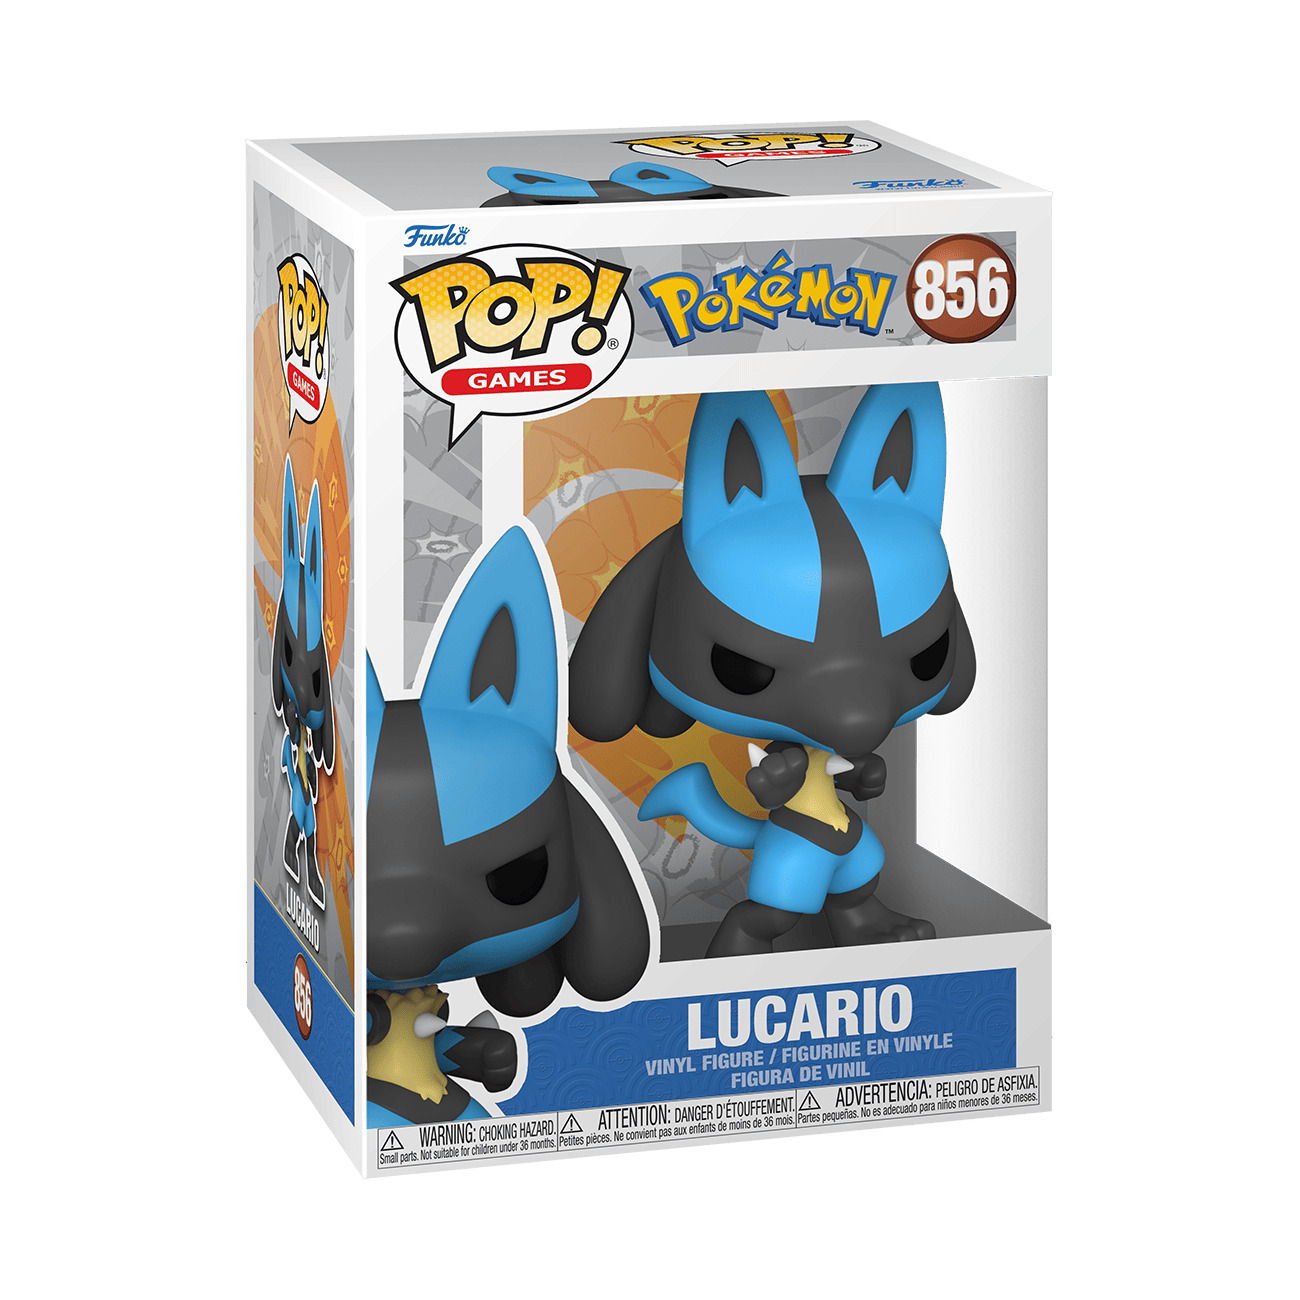 Funko Pop Vinyl: Pokémon - Lucario #856 DAMAGE BOX